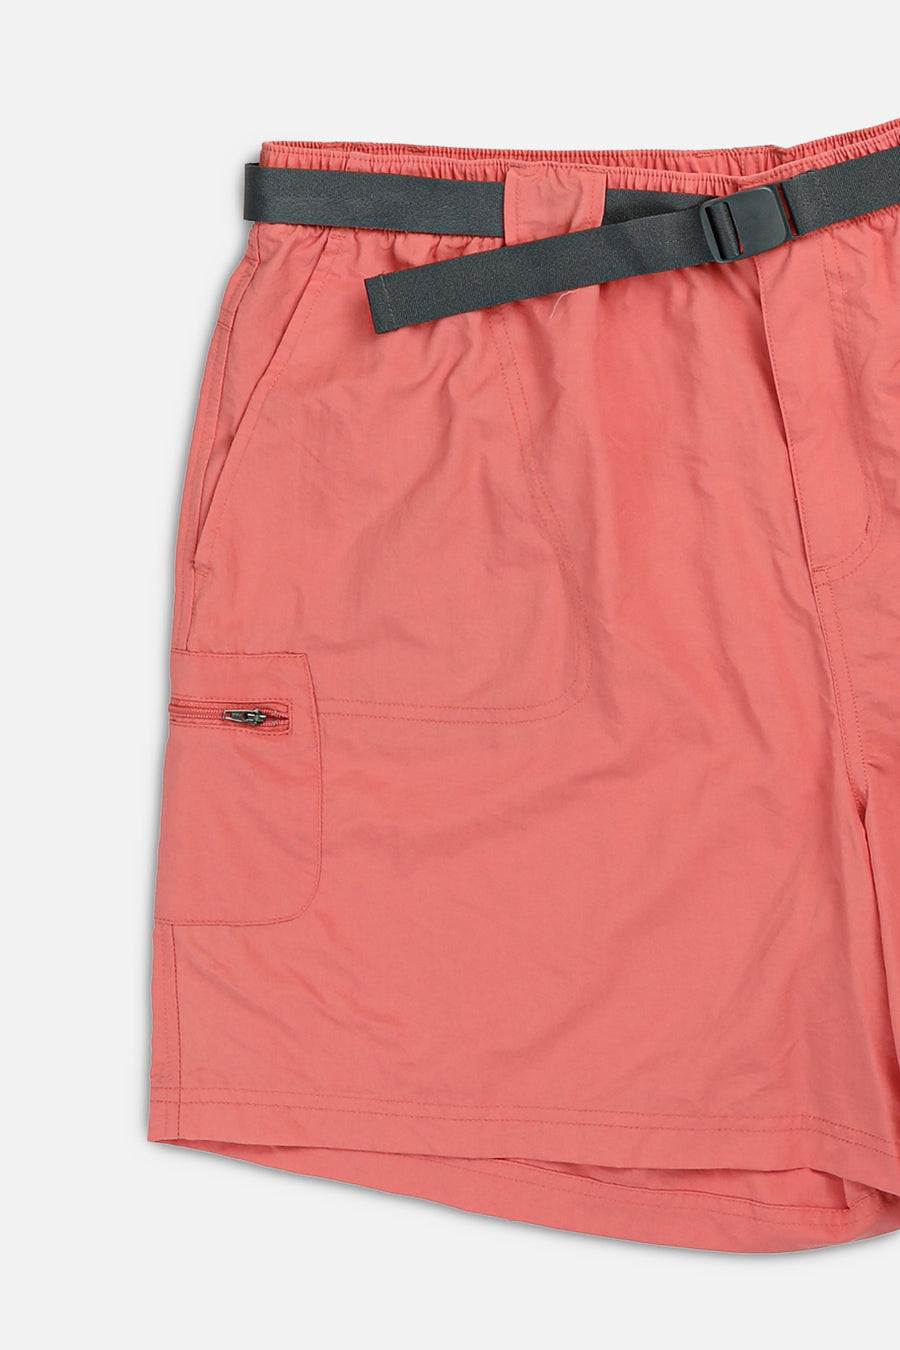 Vintage Columbia Windbreaker Shorts - XL